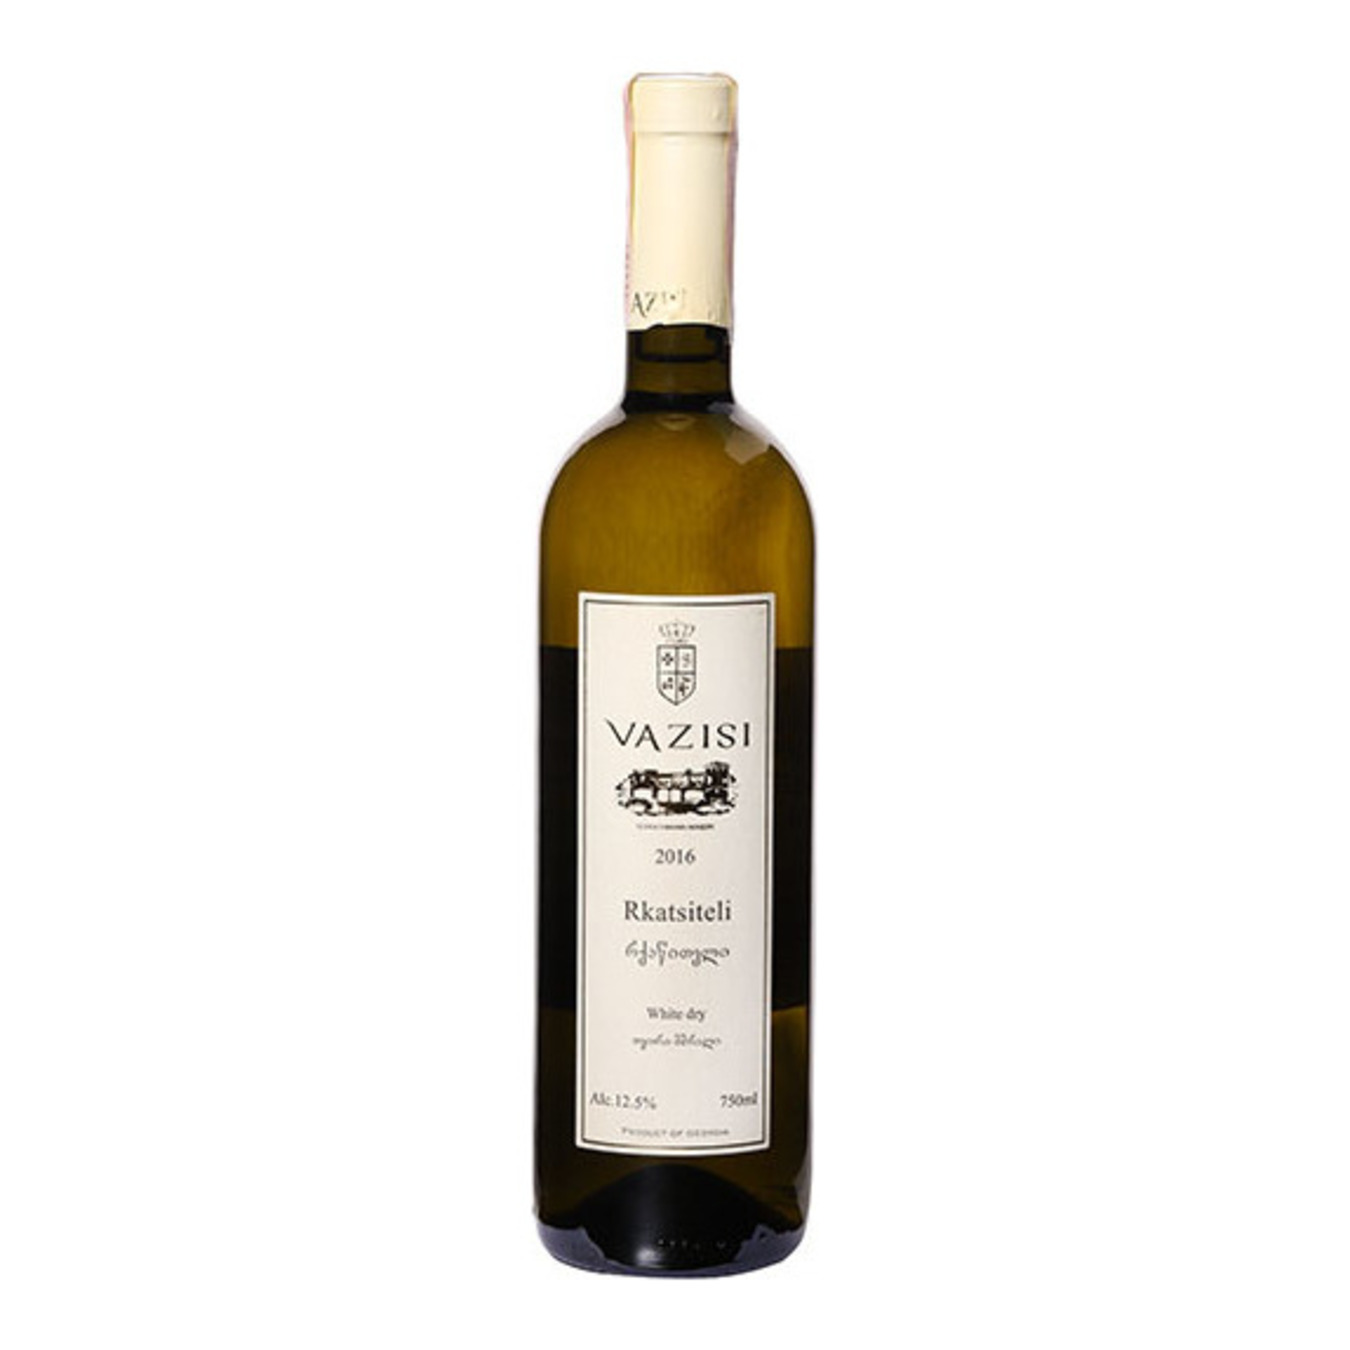 Wine Schuchmann Wines Georgia Vazisi Rkatsitel white dry 13% 0,75l